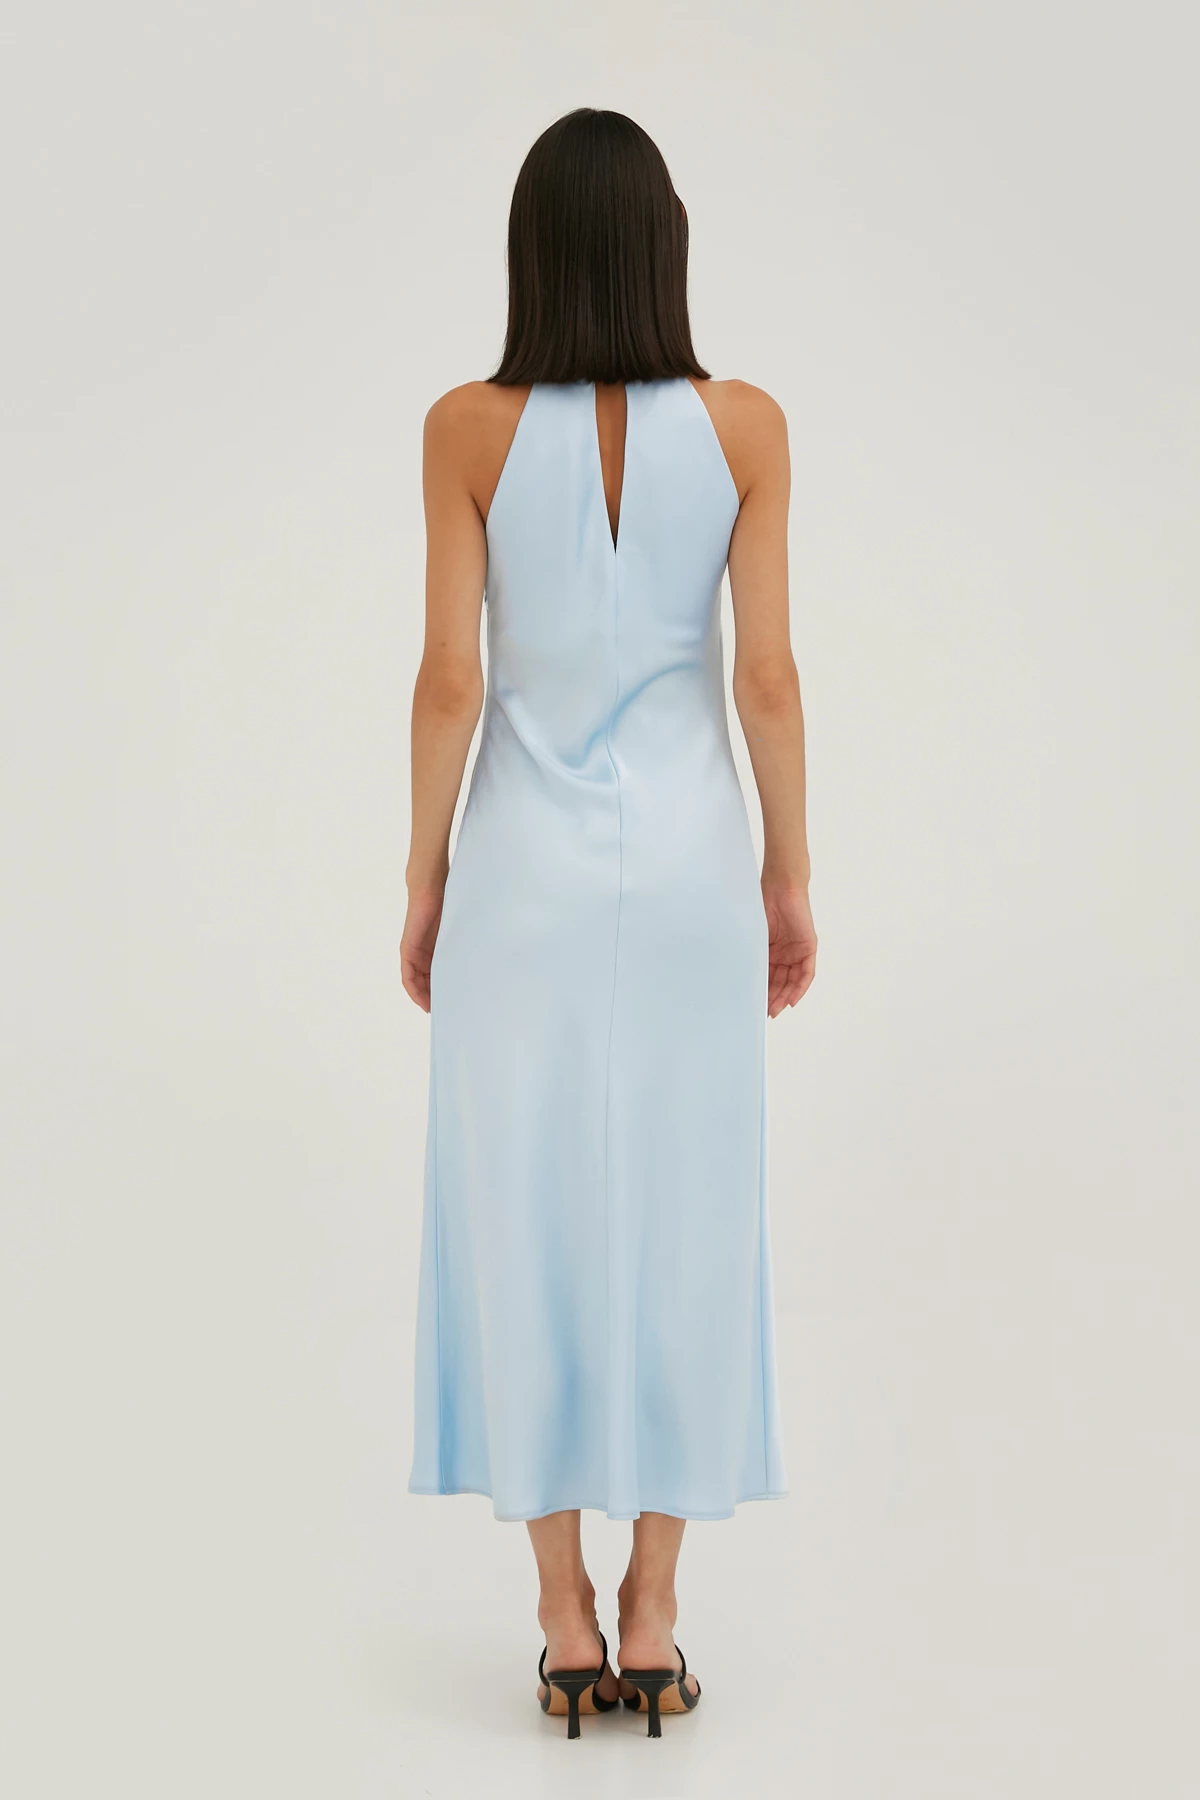 Blue satin midi dress with a high collar, photo 4